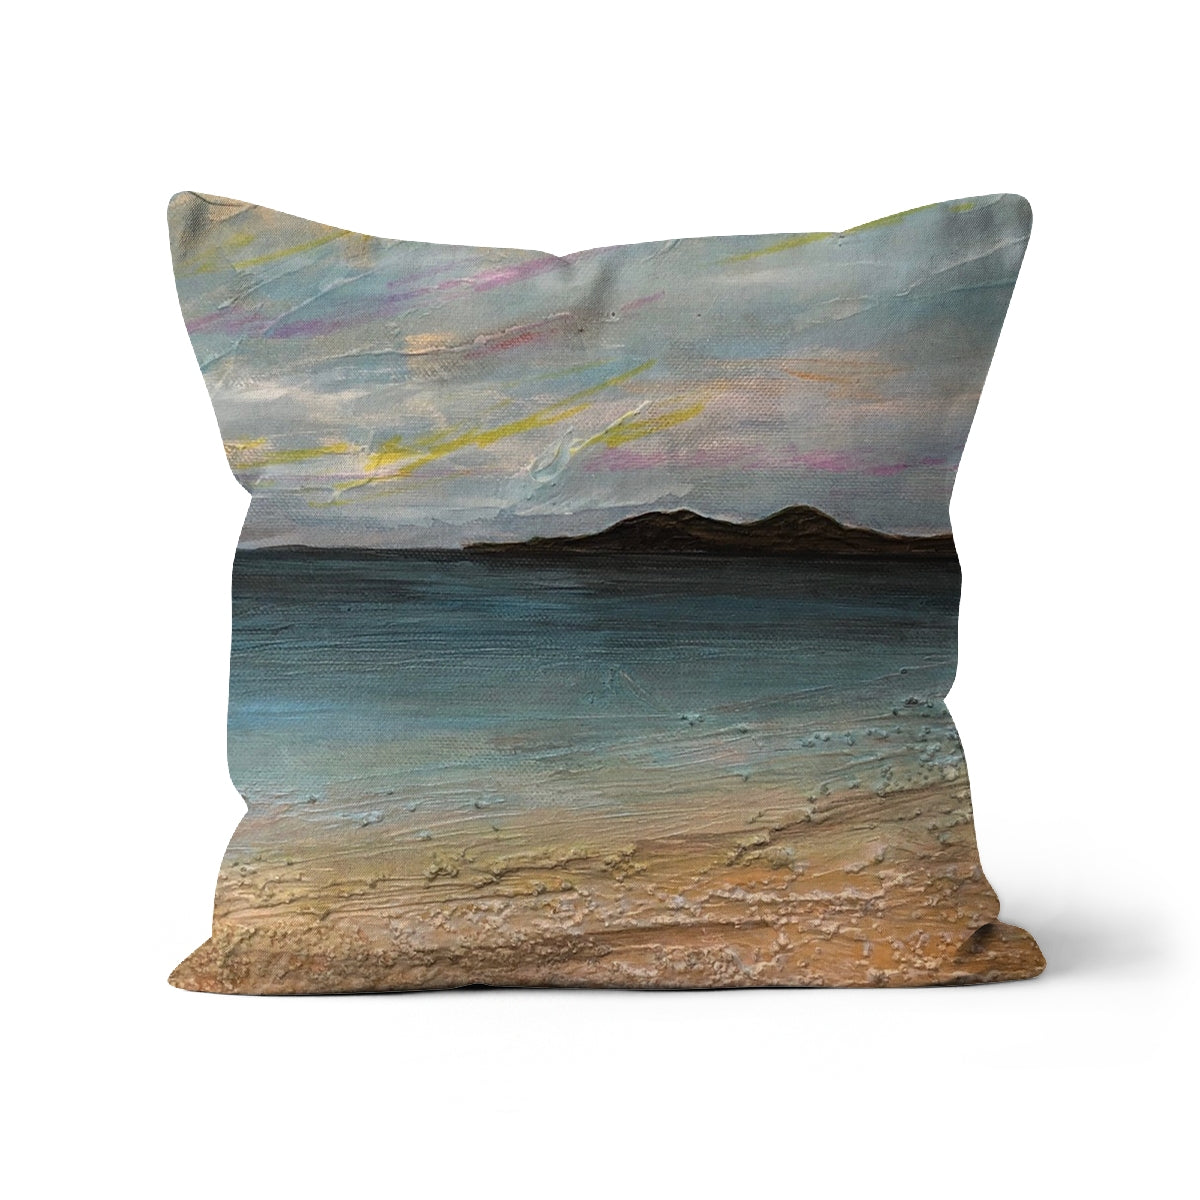 Garrynamonie Beach South Uist Art Gifts Cushion-Cushions-Hebridean Islands Art Gallery-Canvas-22"x22"-Paintings, Prints, Homeware, Art Gifts From Scotland By Scottish Artist Kevin Hunter